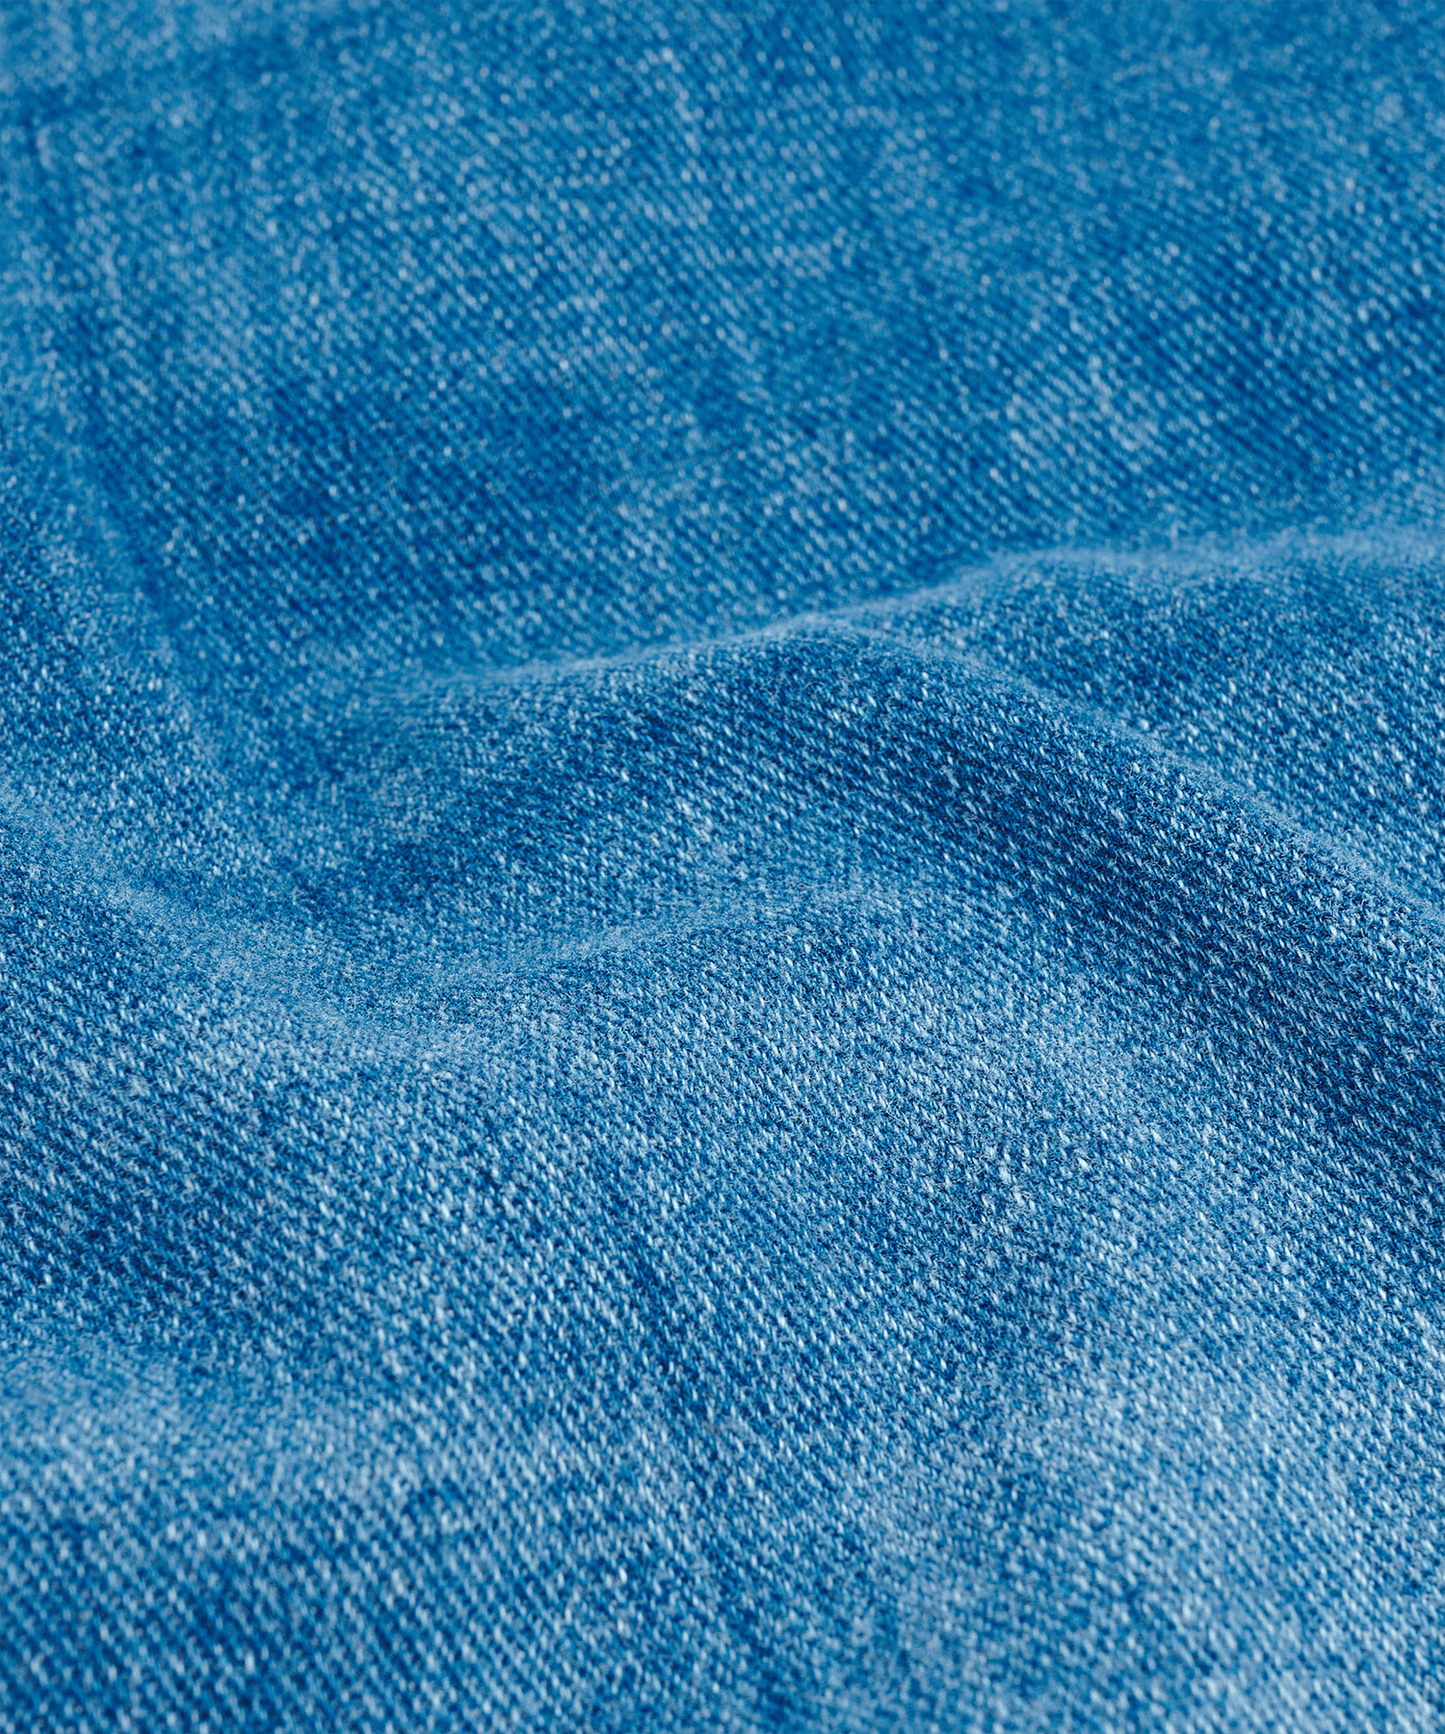 Jeans katoen stretch blauw